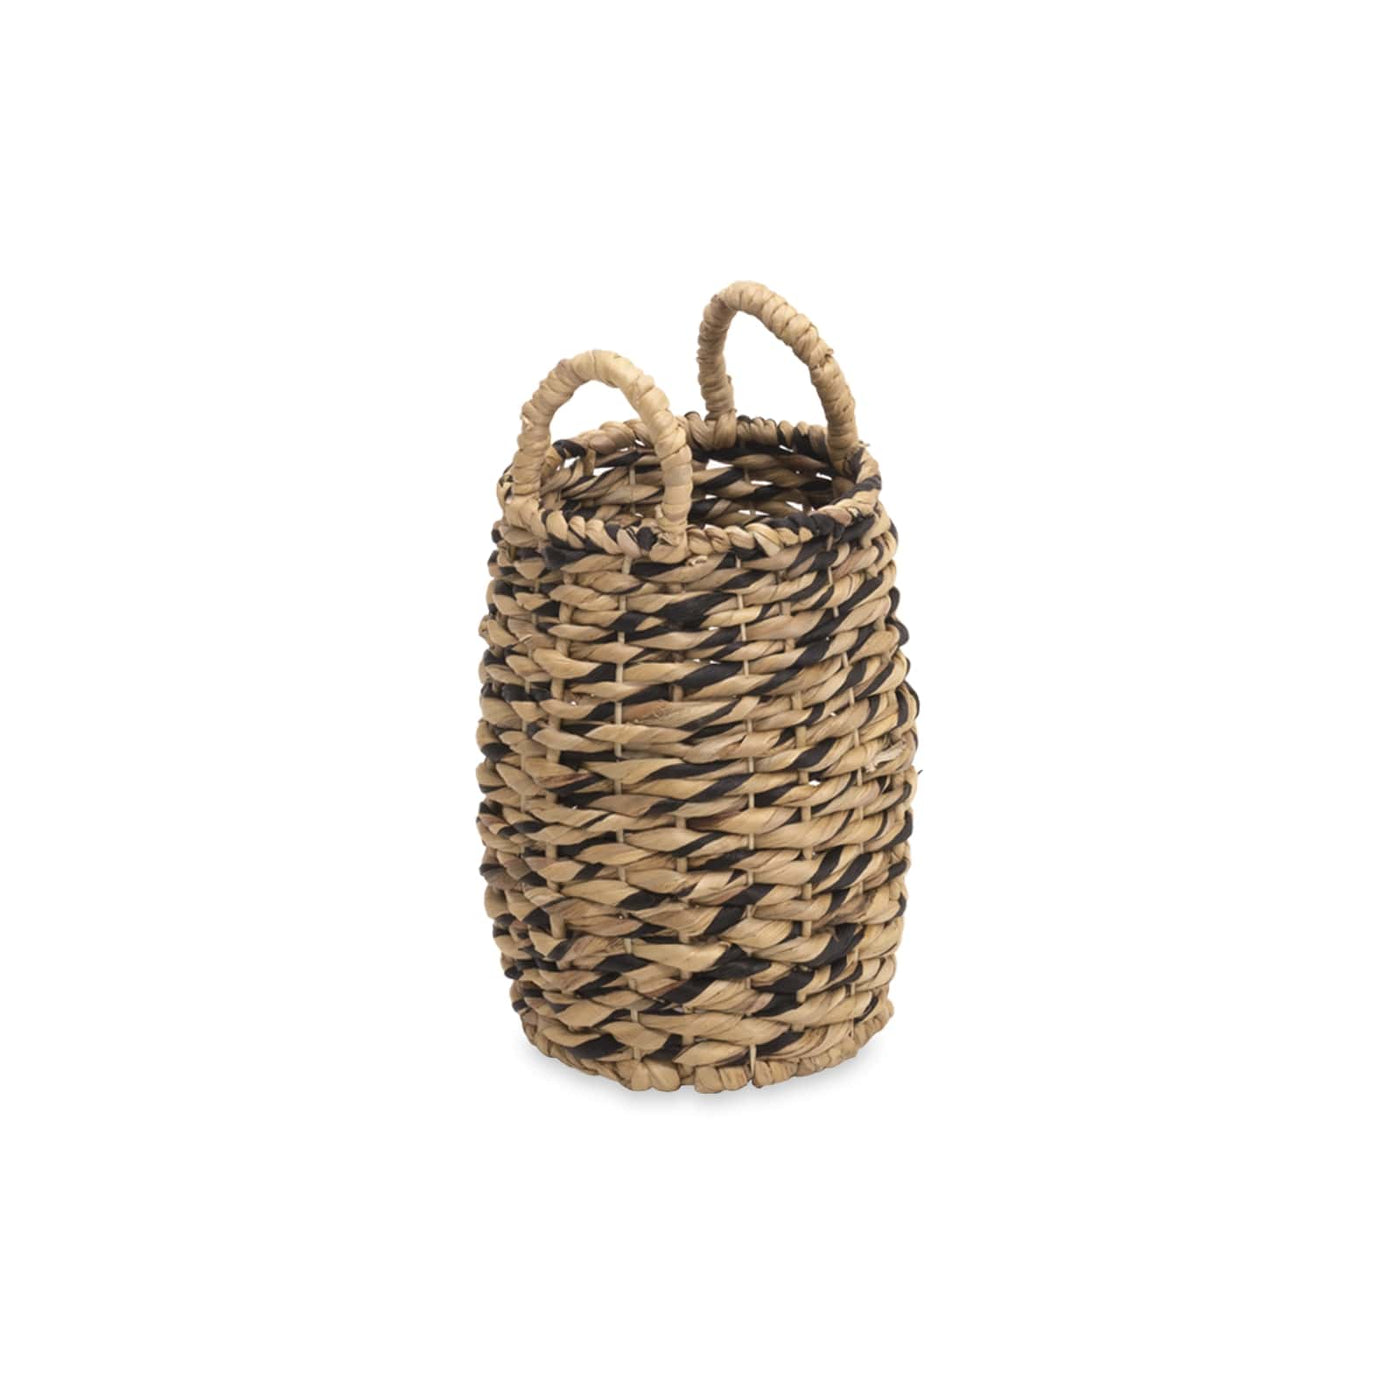 James Water Hyacinth Basket, Natural, S - 1